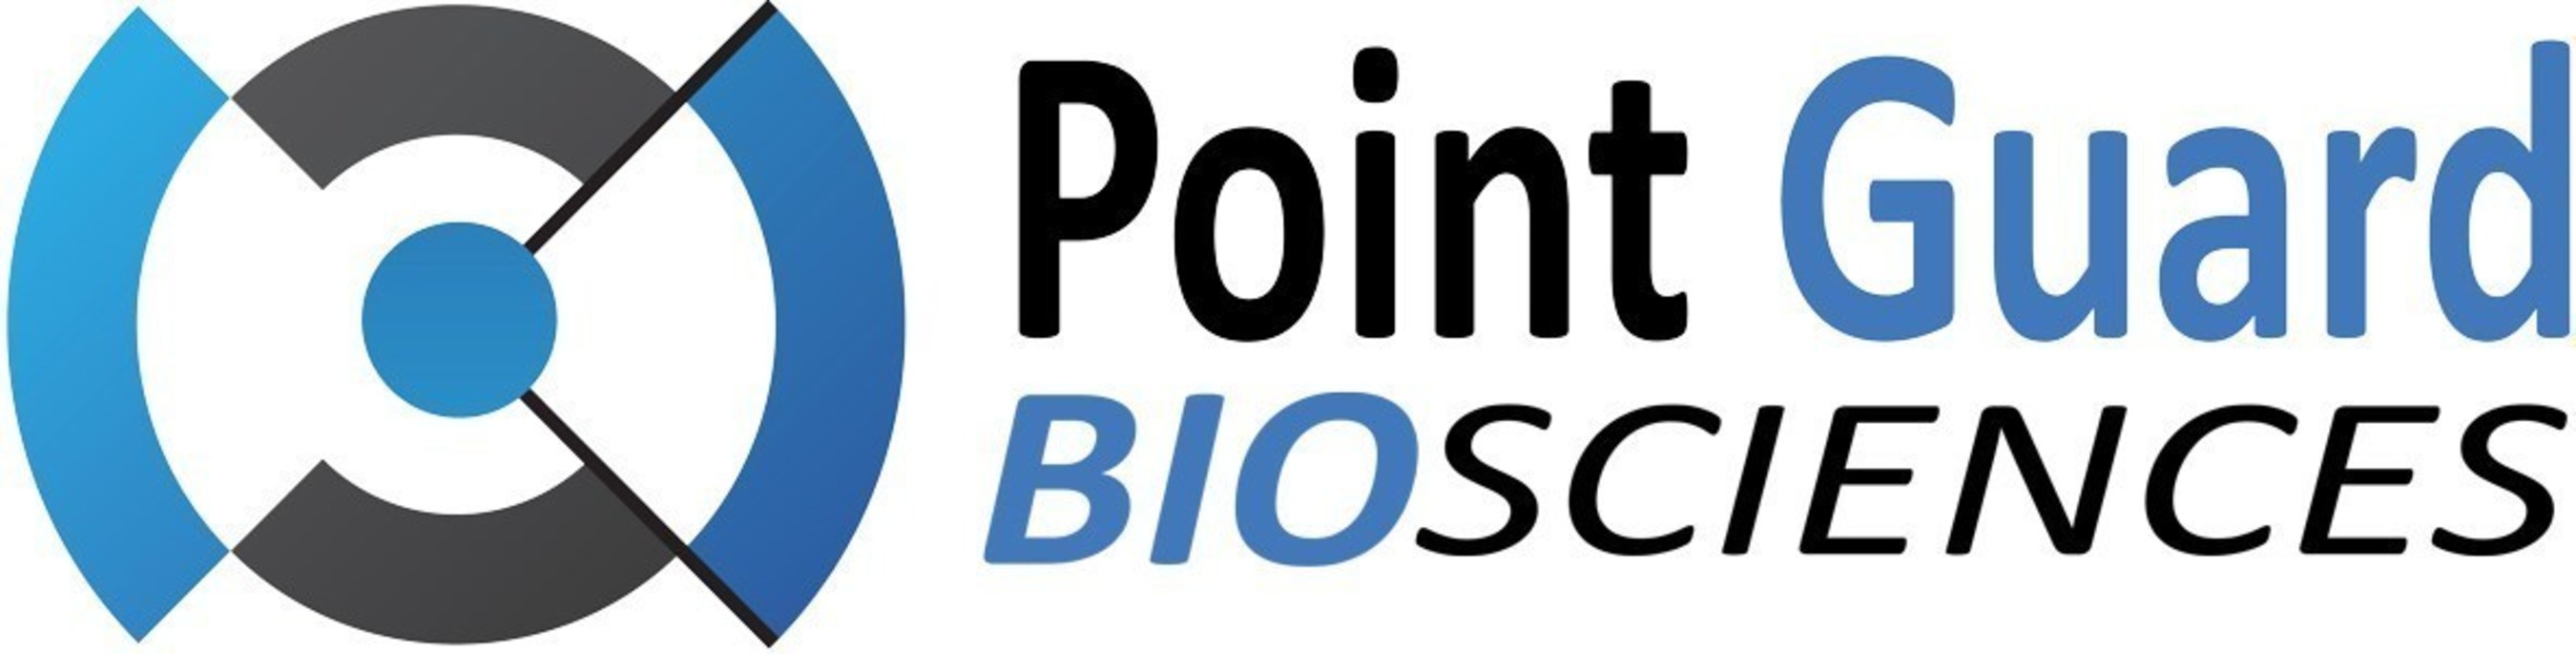 Point Guard Biosciences, LLC logo